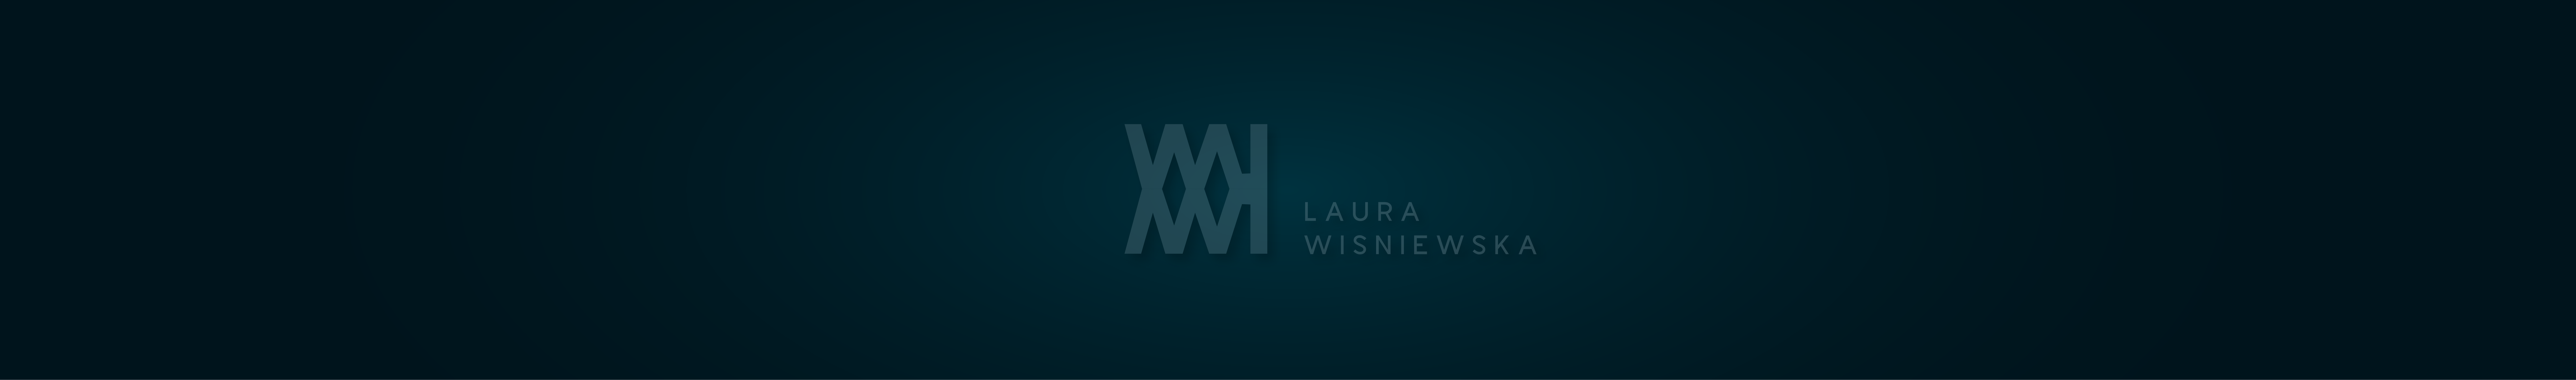 Profielbanner van Laura Wiśniewska